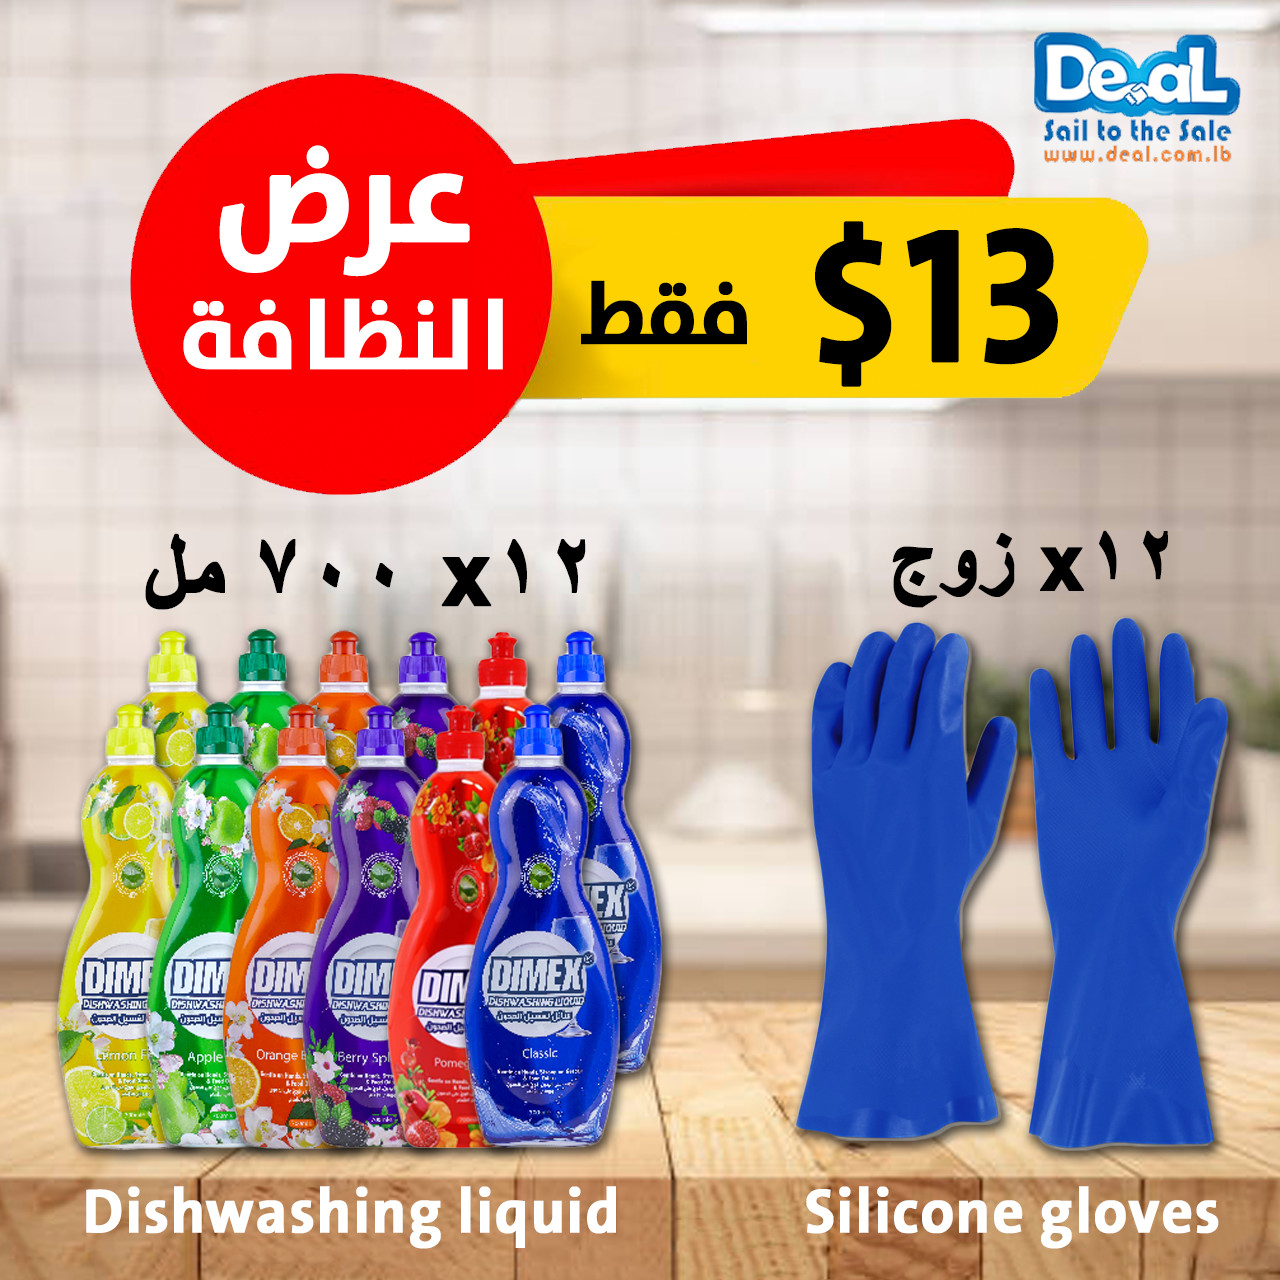 Cleaning+Offer+12pcs+Dimex+Dishwashing+Liquid+%2B+12pair+Silicone+Gloves